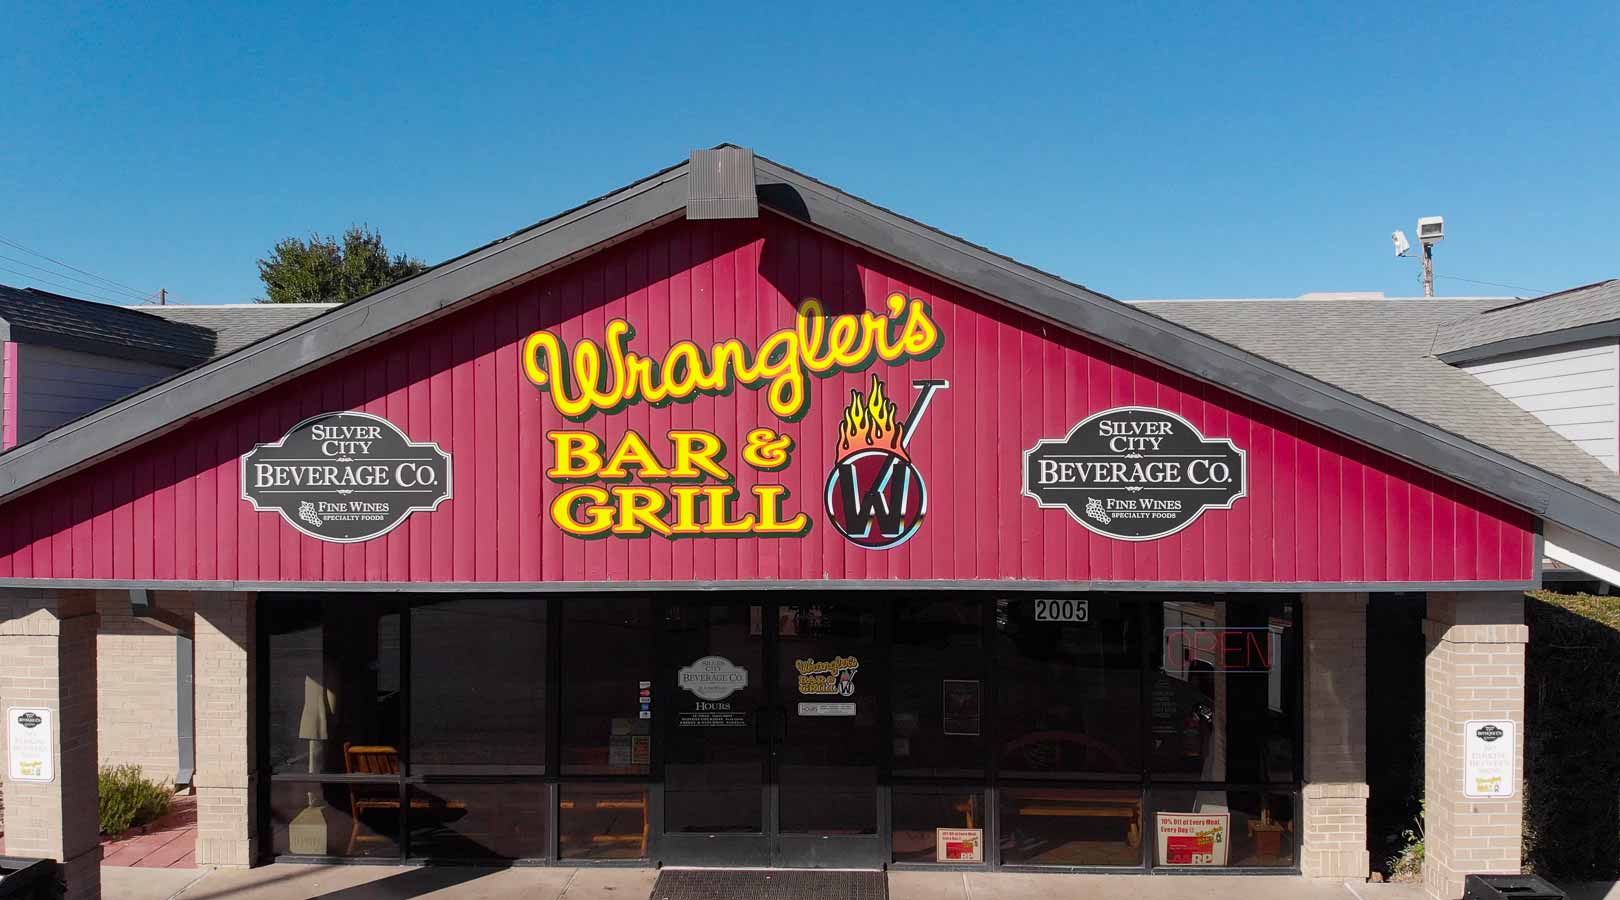 Wrangler’s Bar & Grill - Family Restaurant in Silver City, NM